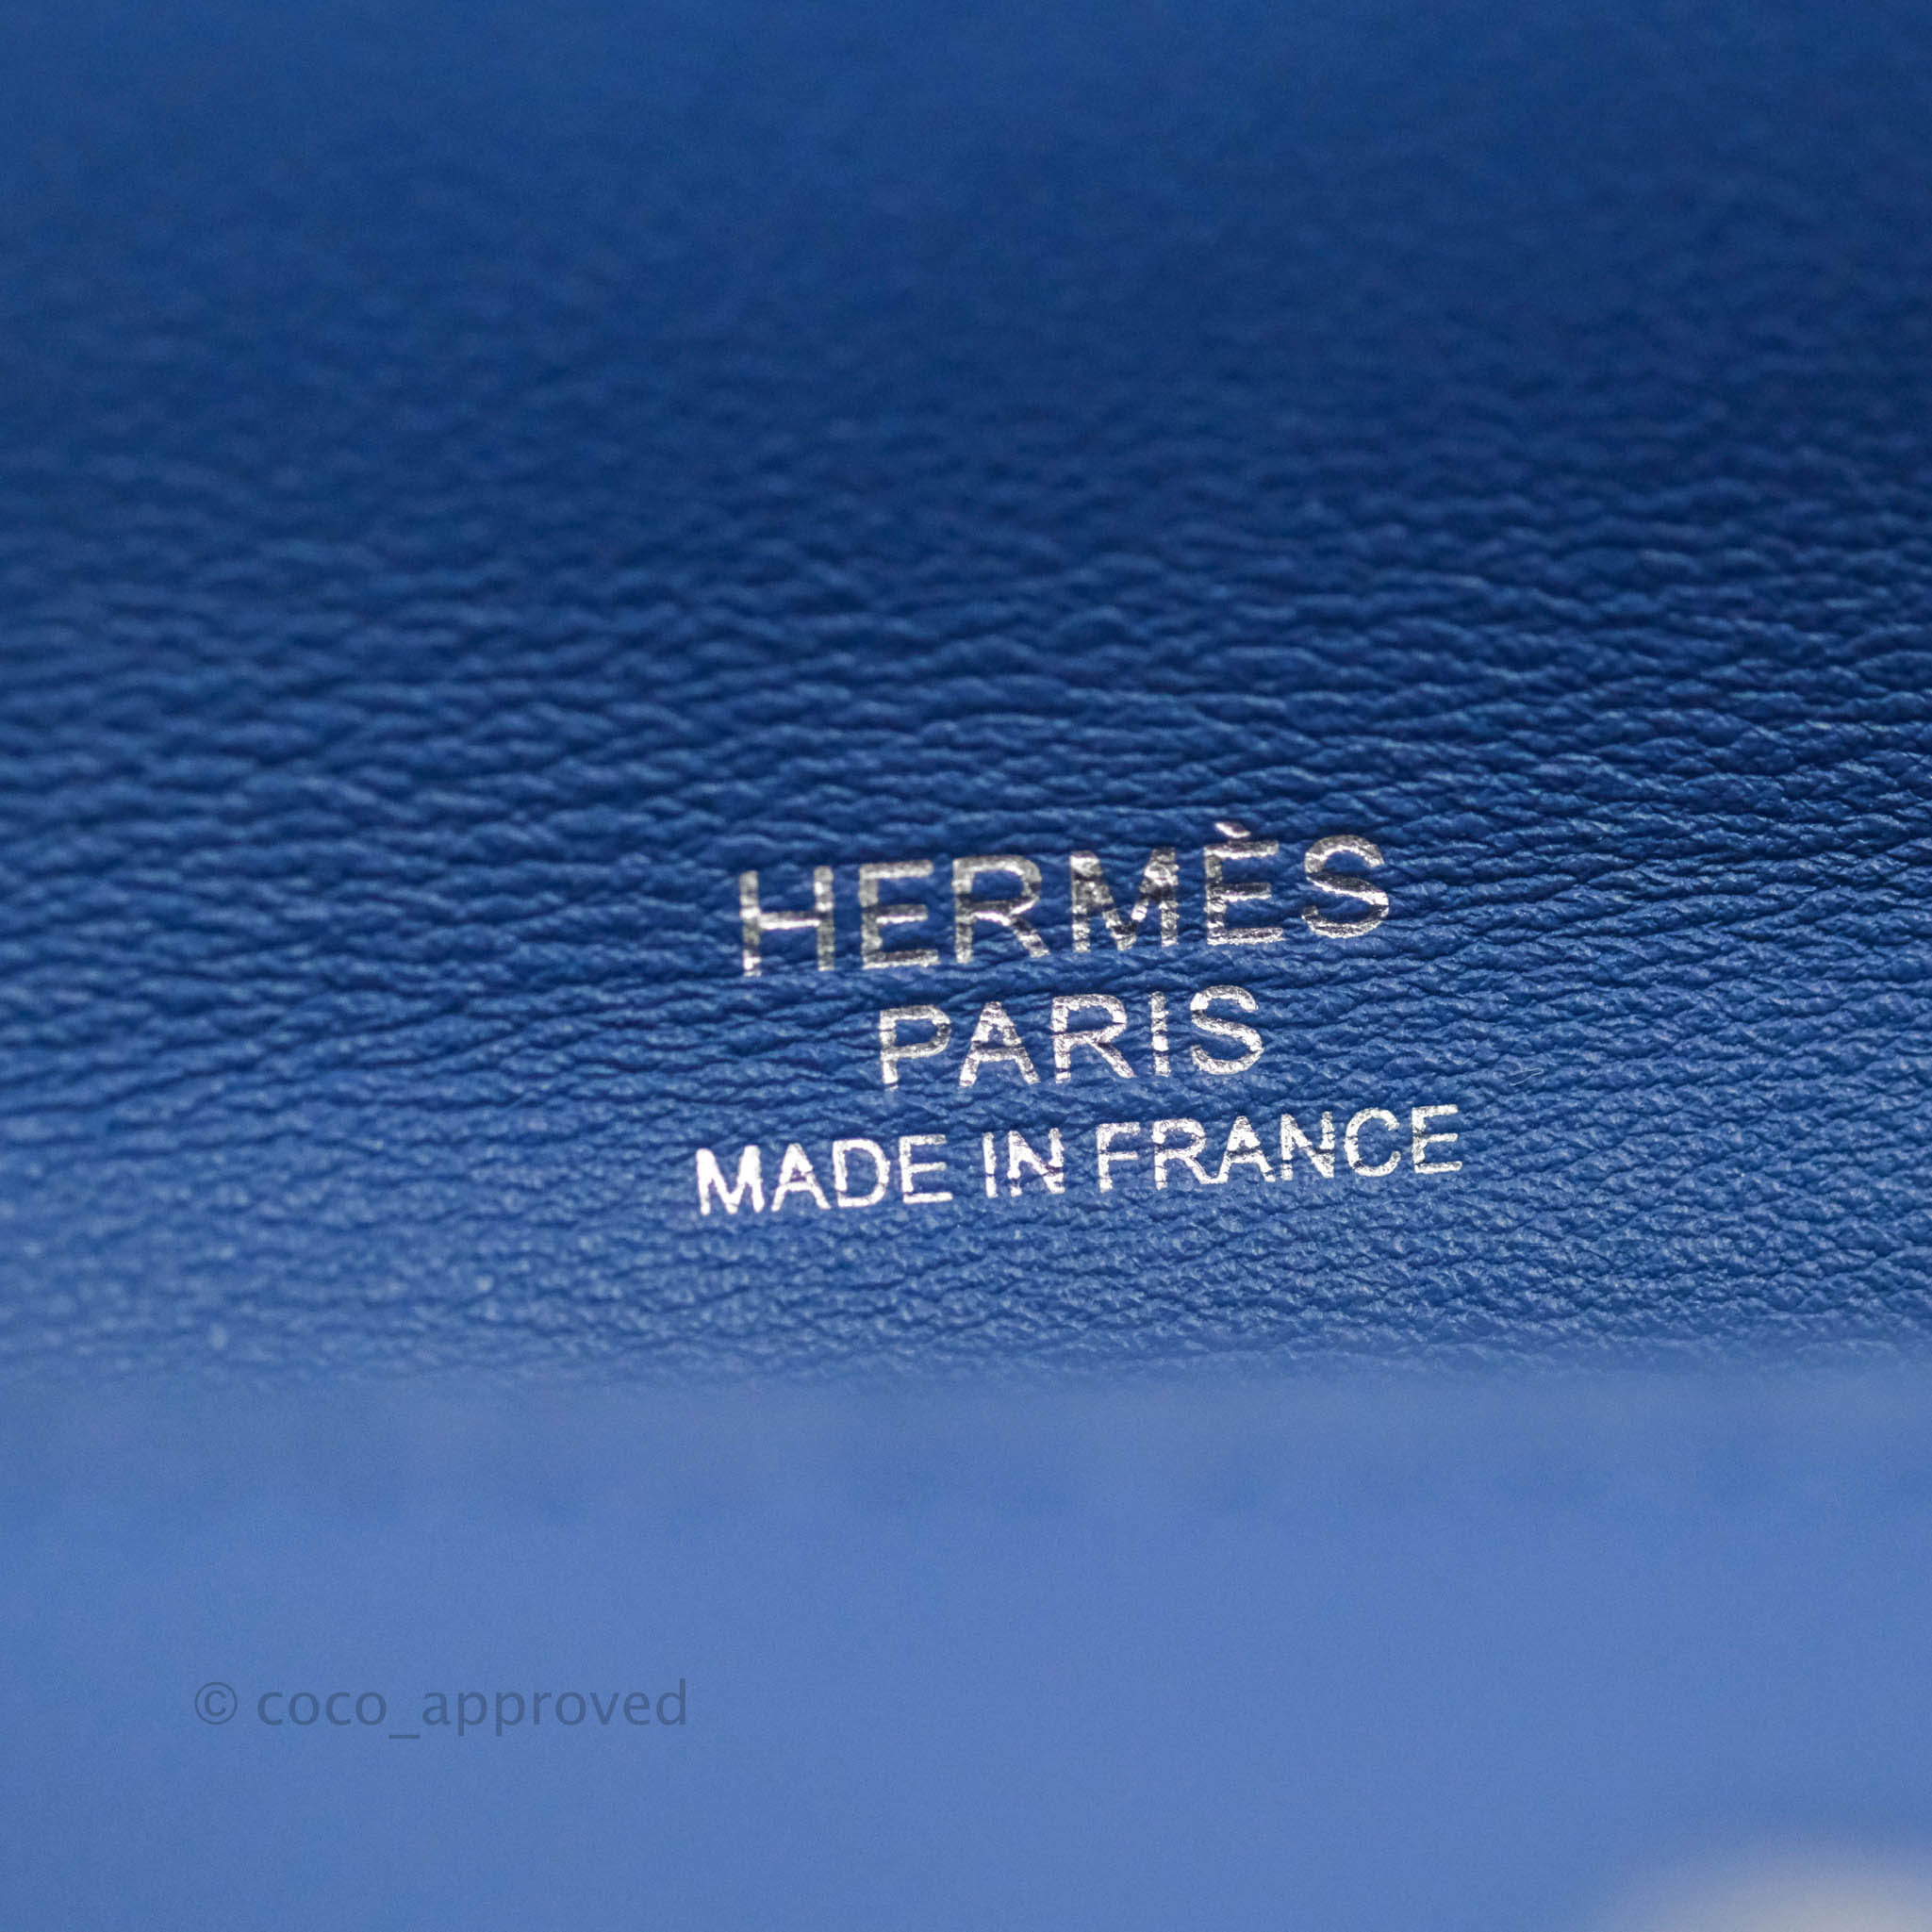 Hermès 101: All About the Hermès 24/24 - PurseBop